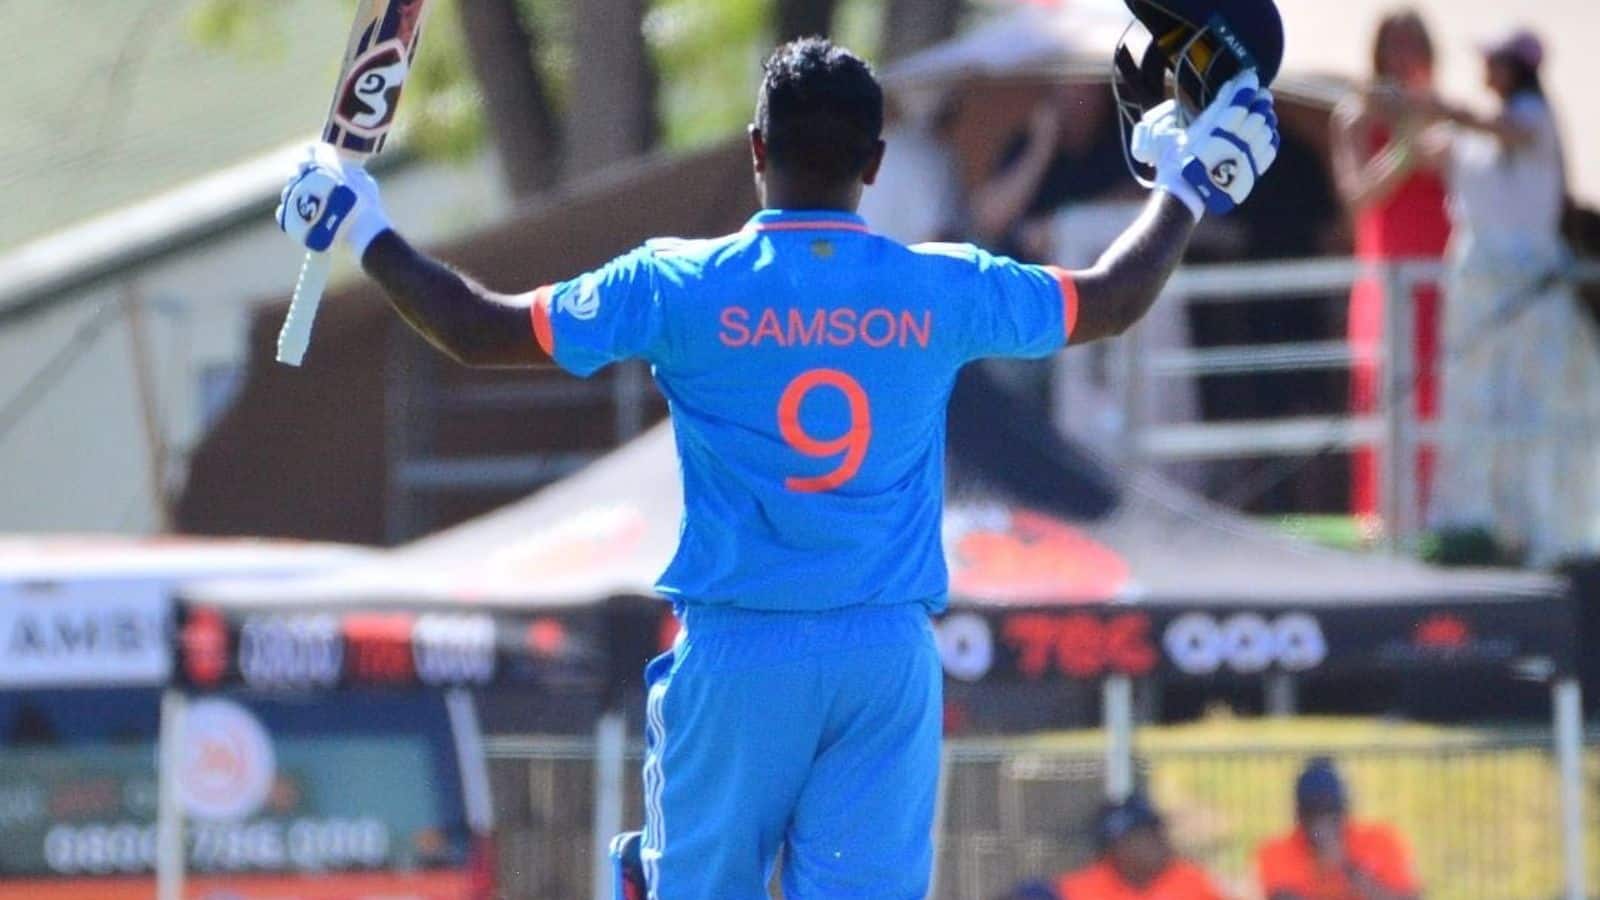 'He Has Kickstarted His Int'l Career' - Gambhir On Samson's Special Century vs SA